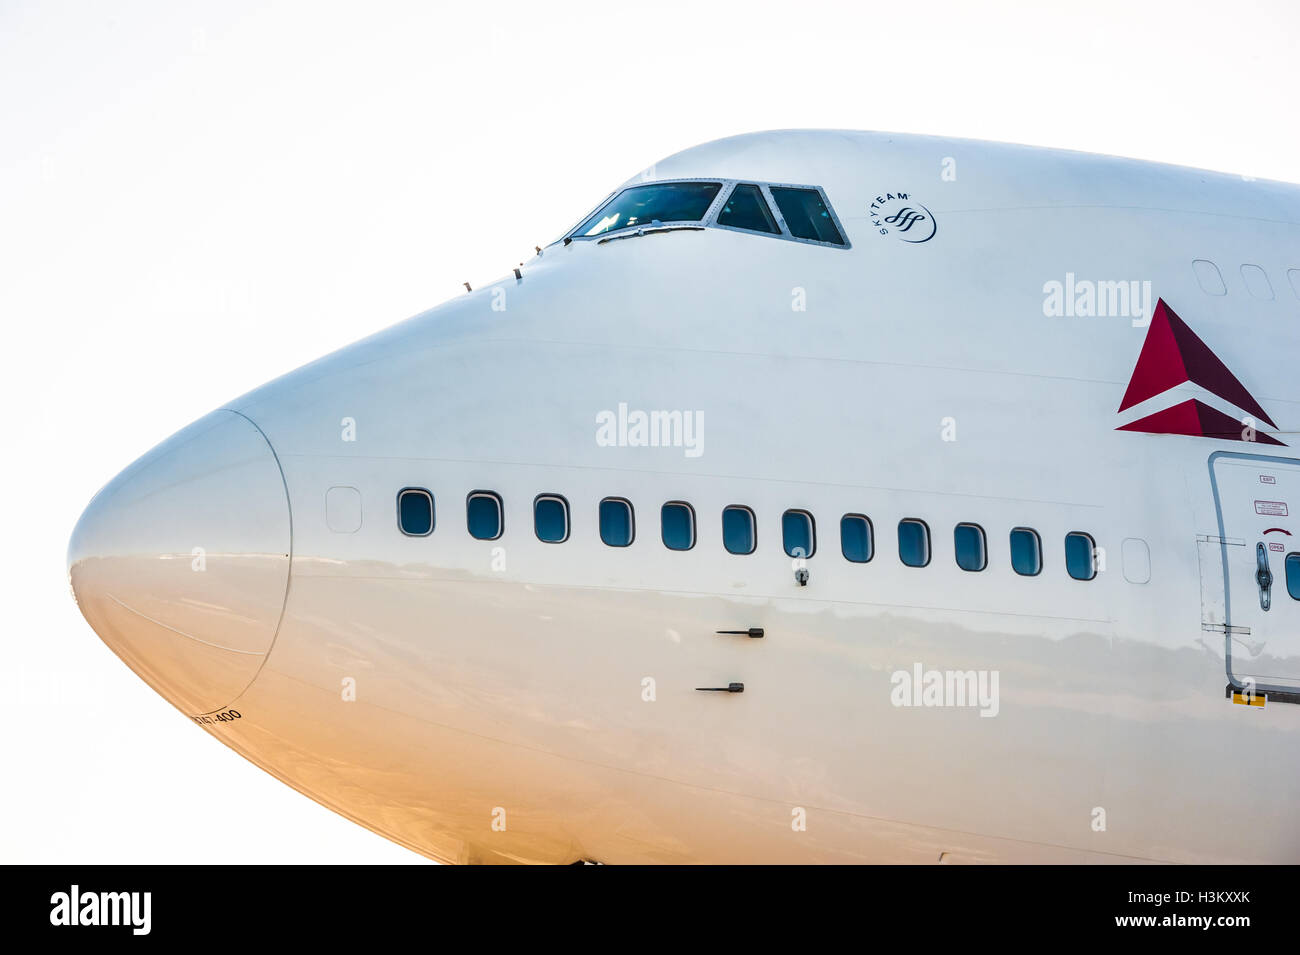 A Delta Air Lines Boeing 747-400 jumbo jet greets visitors to the Delta Flight Museum at Atlanta International Airport, USA. Stock Photo